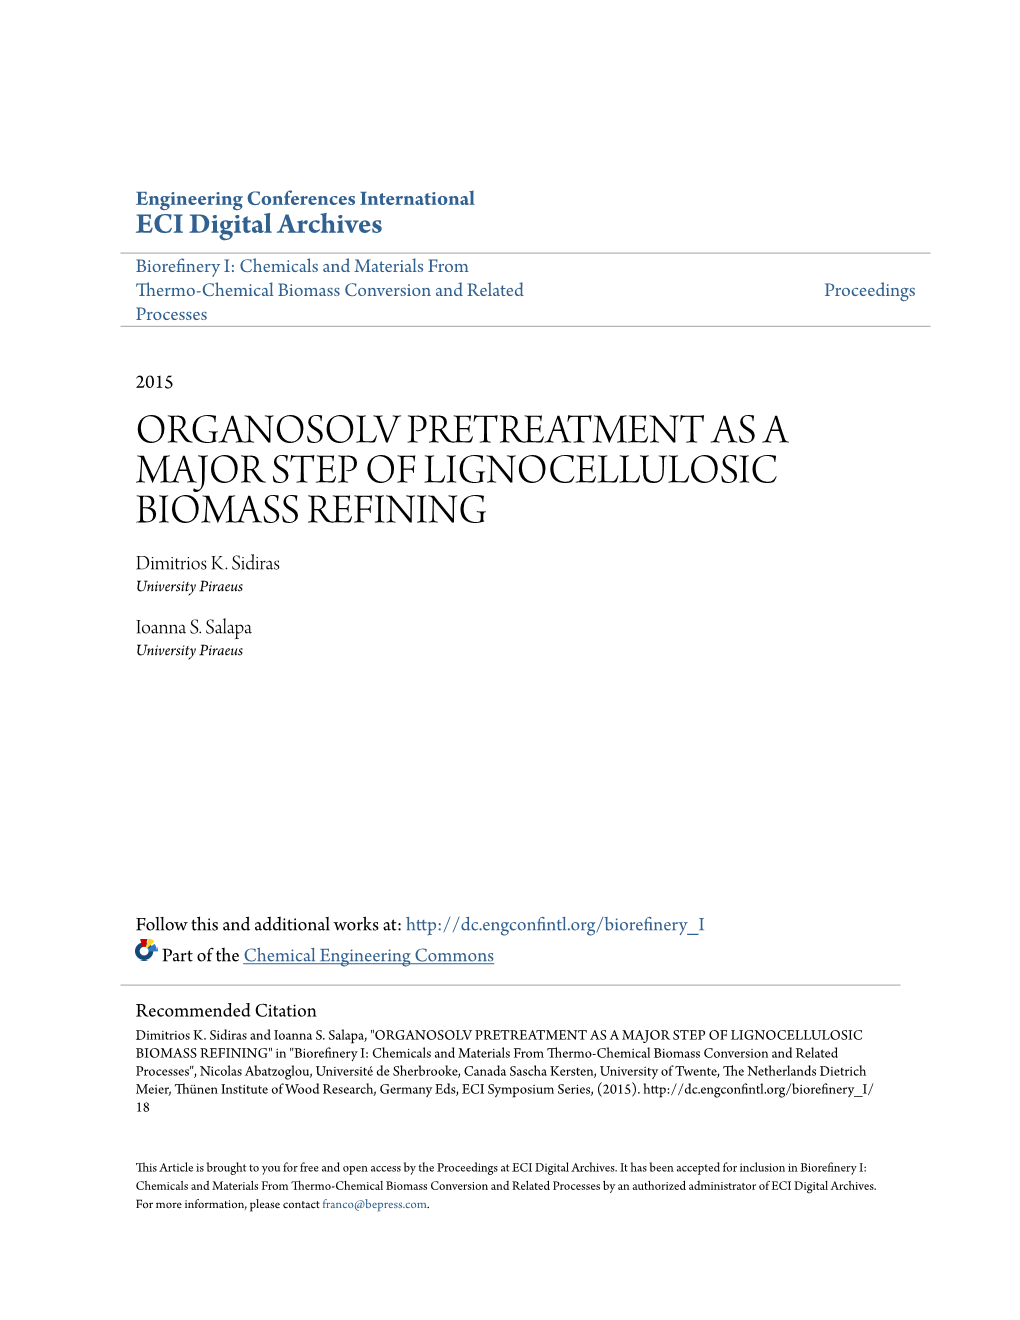 ORGANOSOLV PRETREATMENT AS a MAJOR STEP of LIGNOCELLULOSIC BIOMASS REFINING Dimitrios K